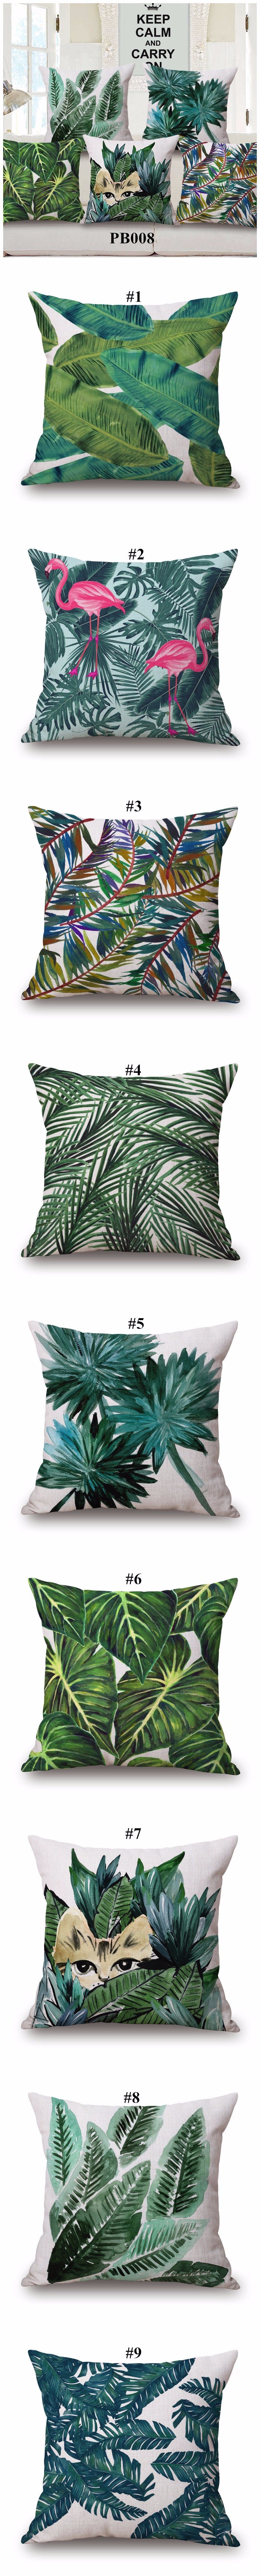 Tropical Plants Digital Printed Pillow / Cushion Home Decorative